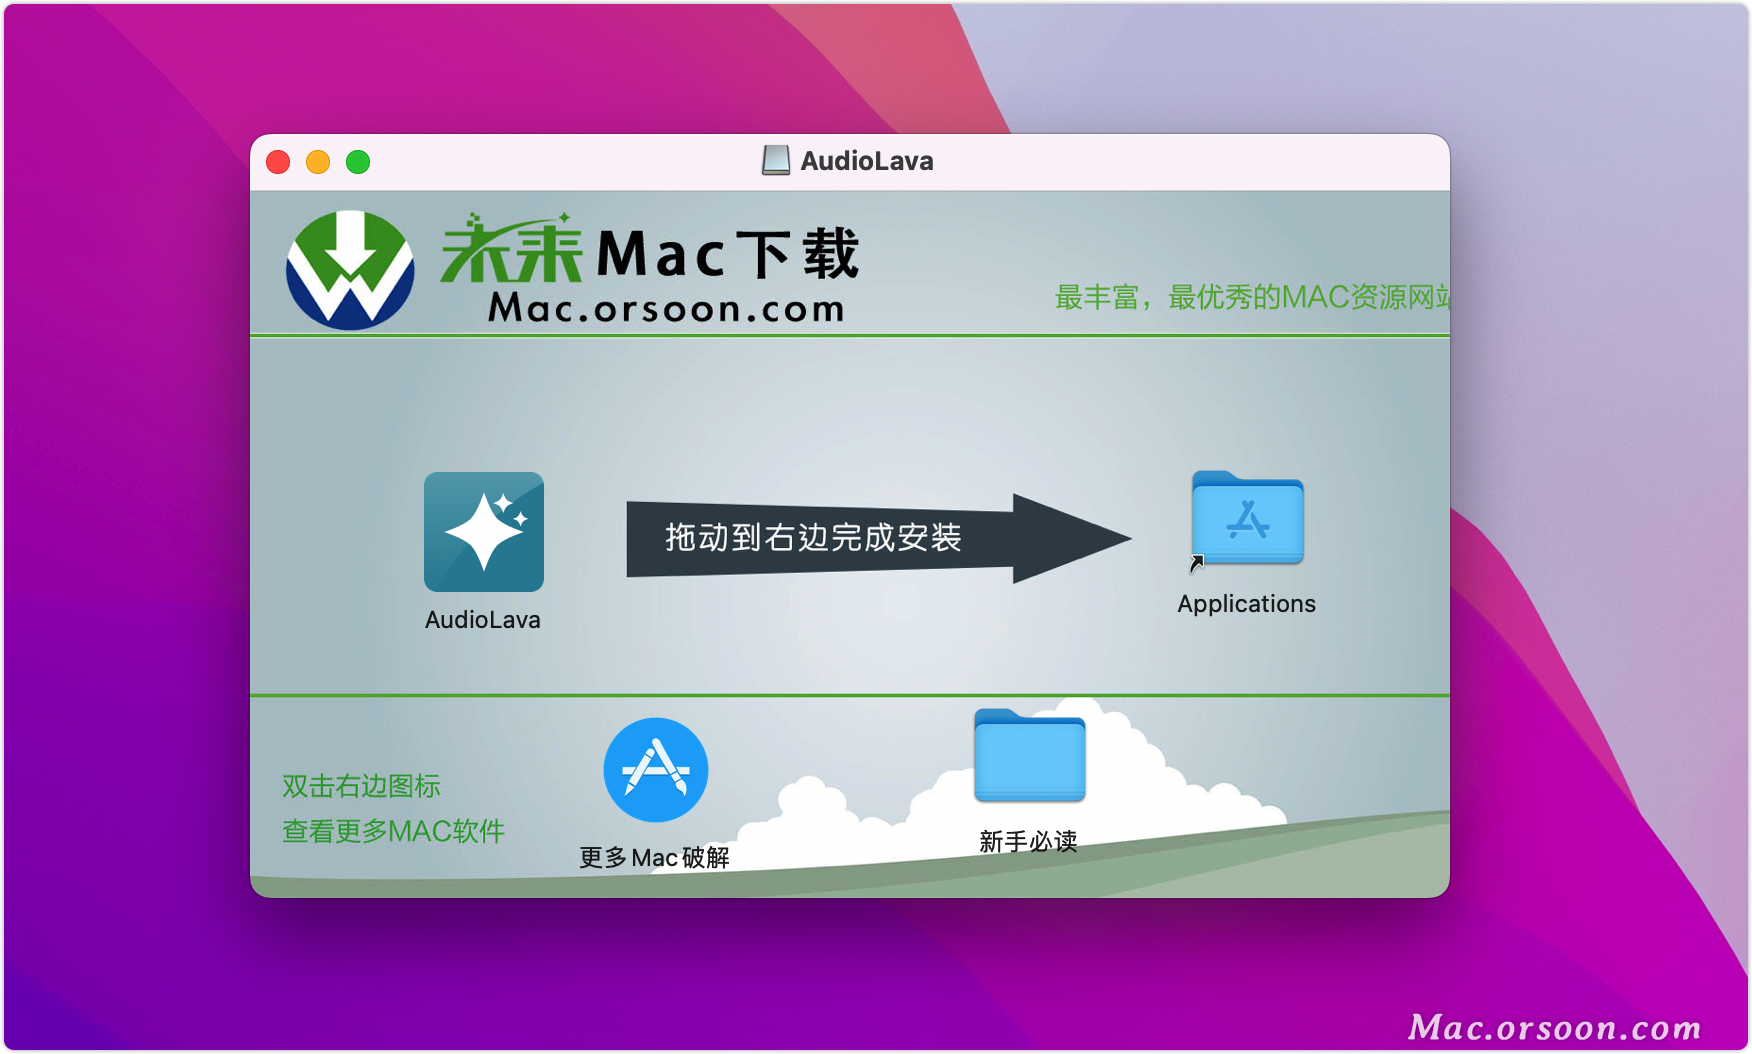 Acon Digital AudioLava download the new for windows